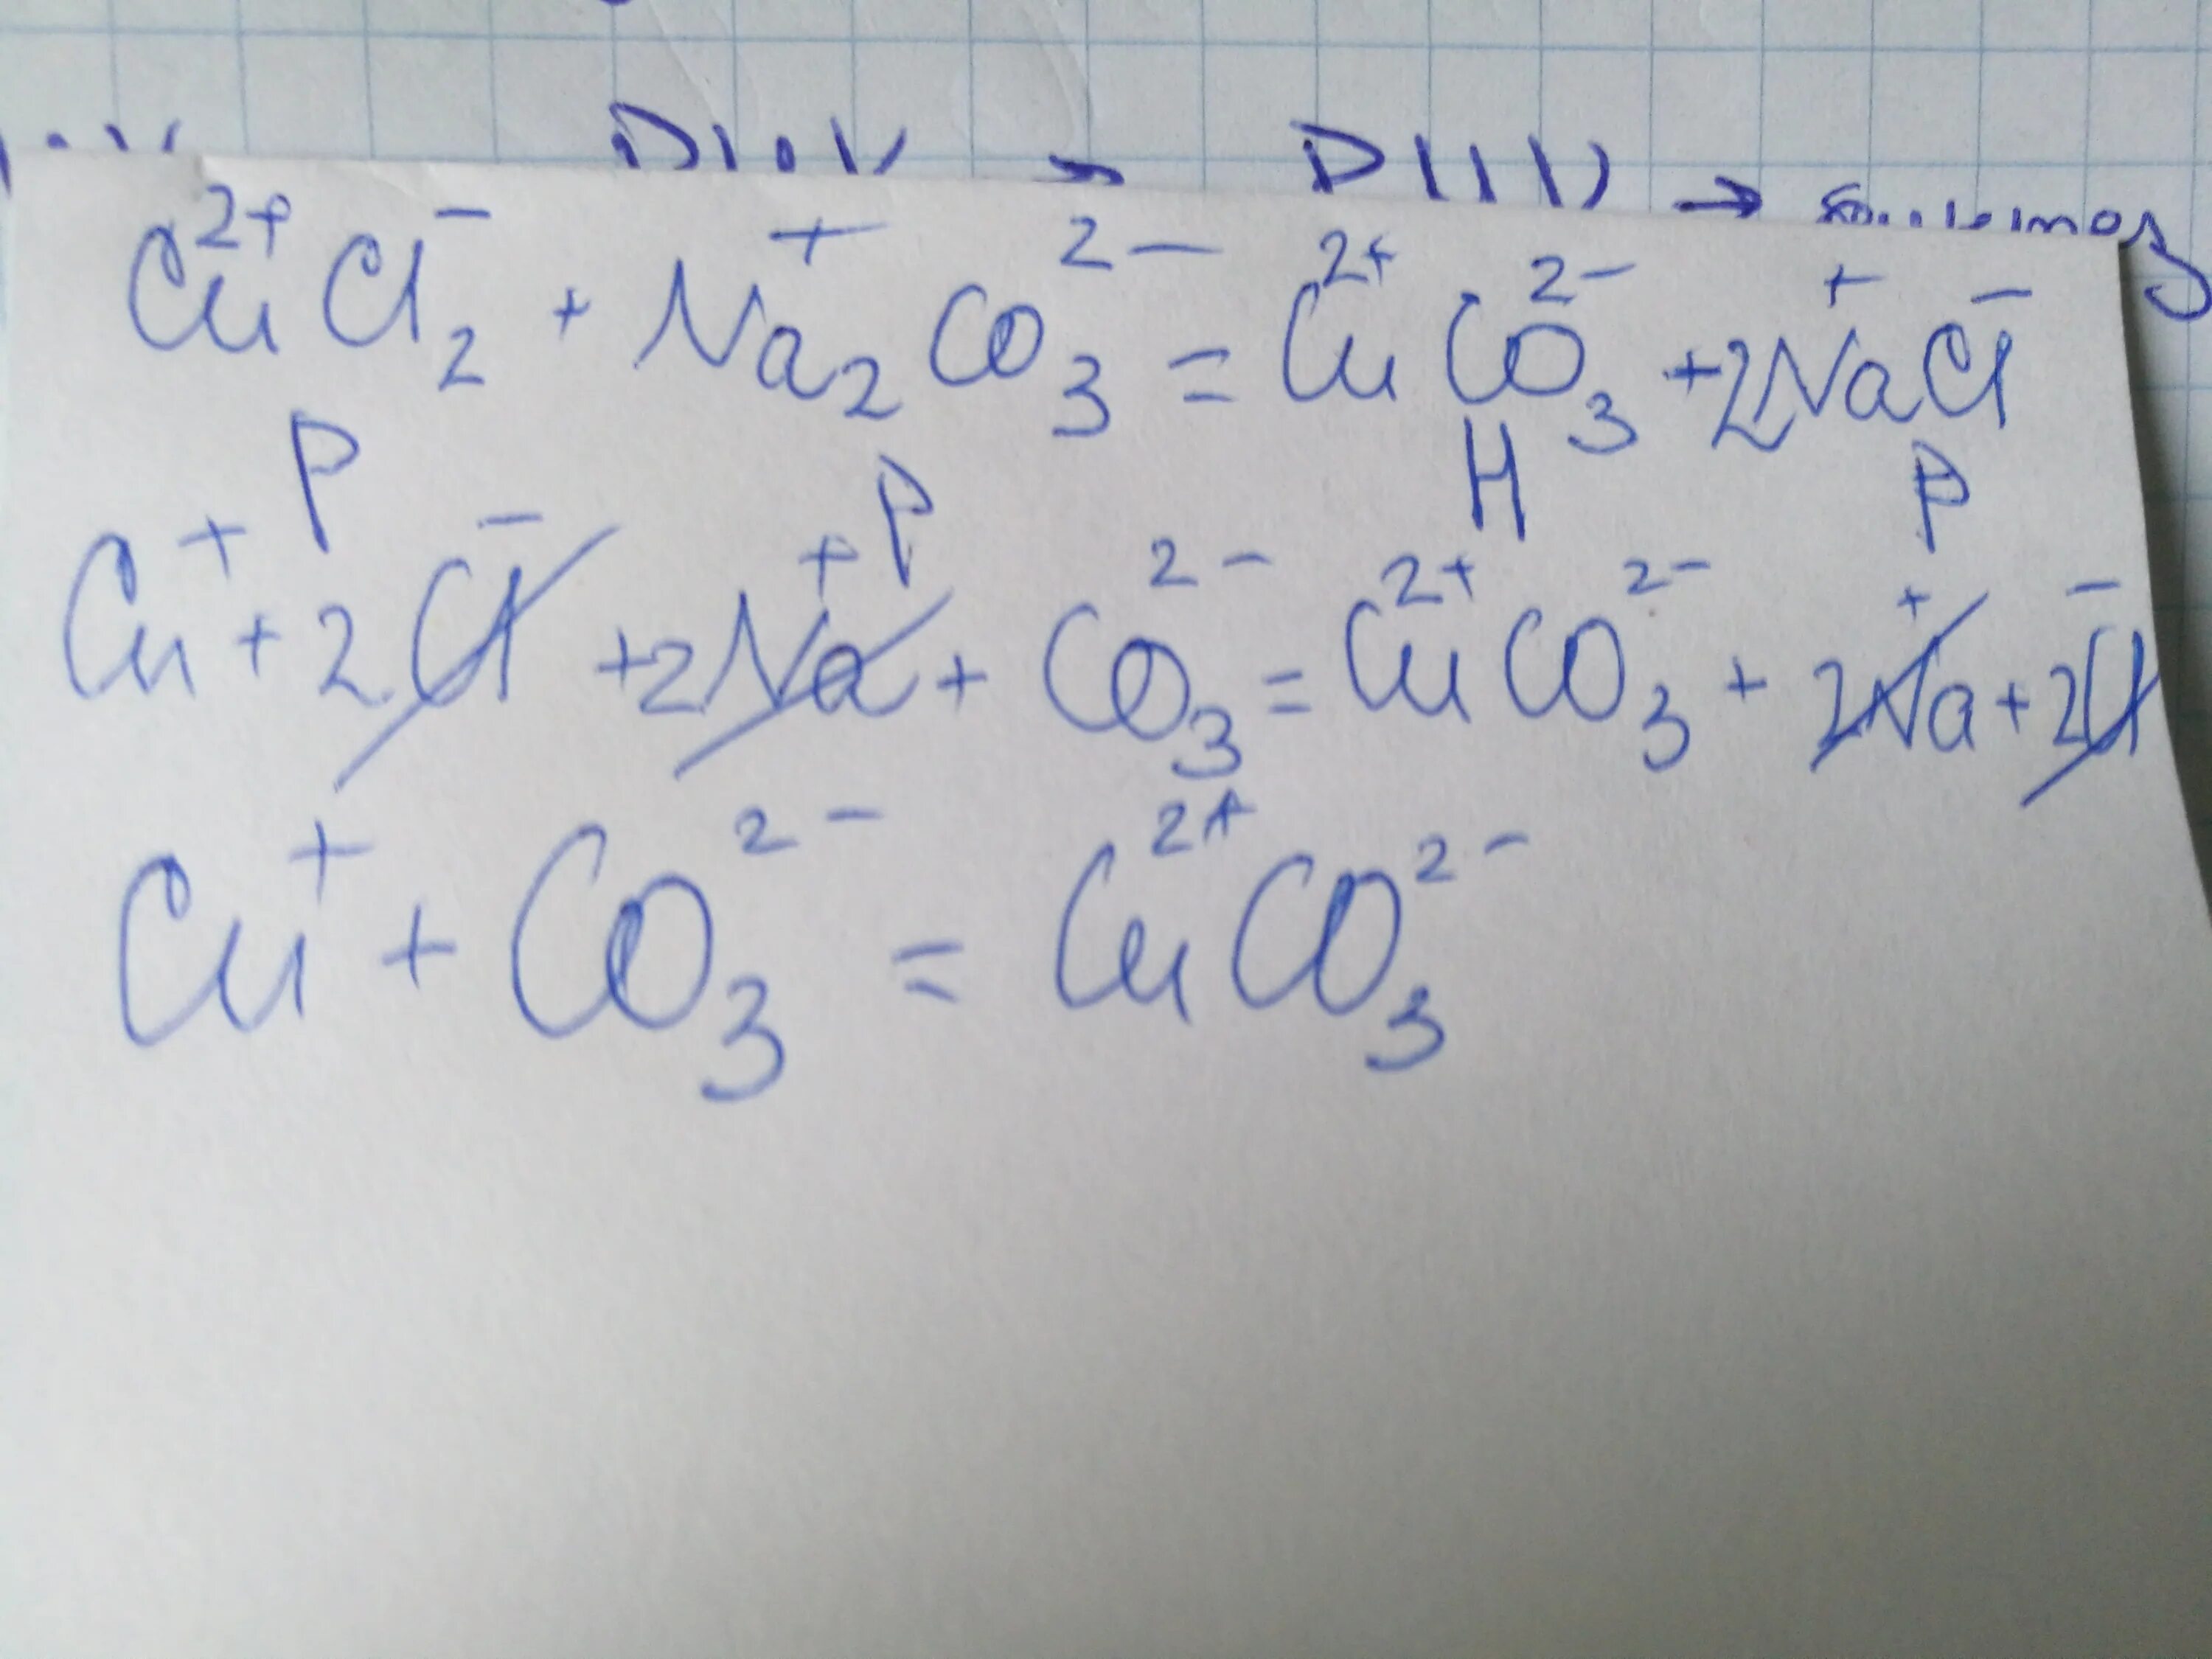 Cucl2 cu no3 2 h2o. Cucl2 na2s. Cucl2+na2s ионное уравнение полное. Cucl2+h2s ионное уравнение. Cucl2+agno3 полное и сокращенное ионное уравнение.